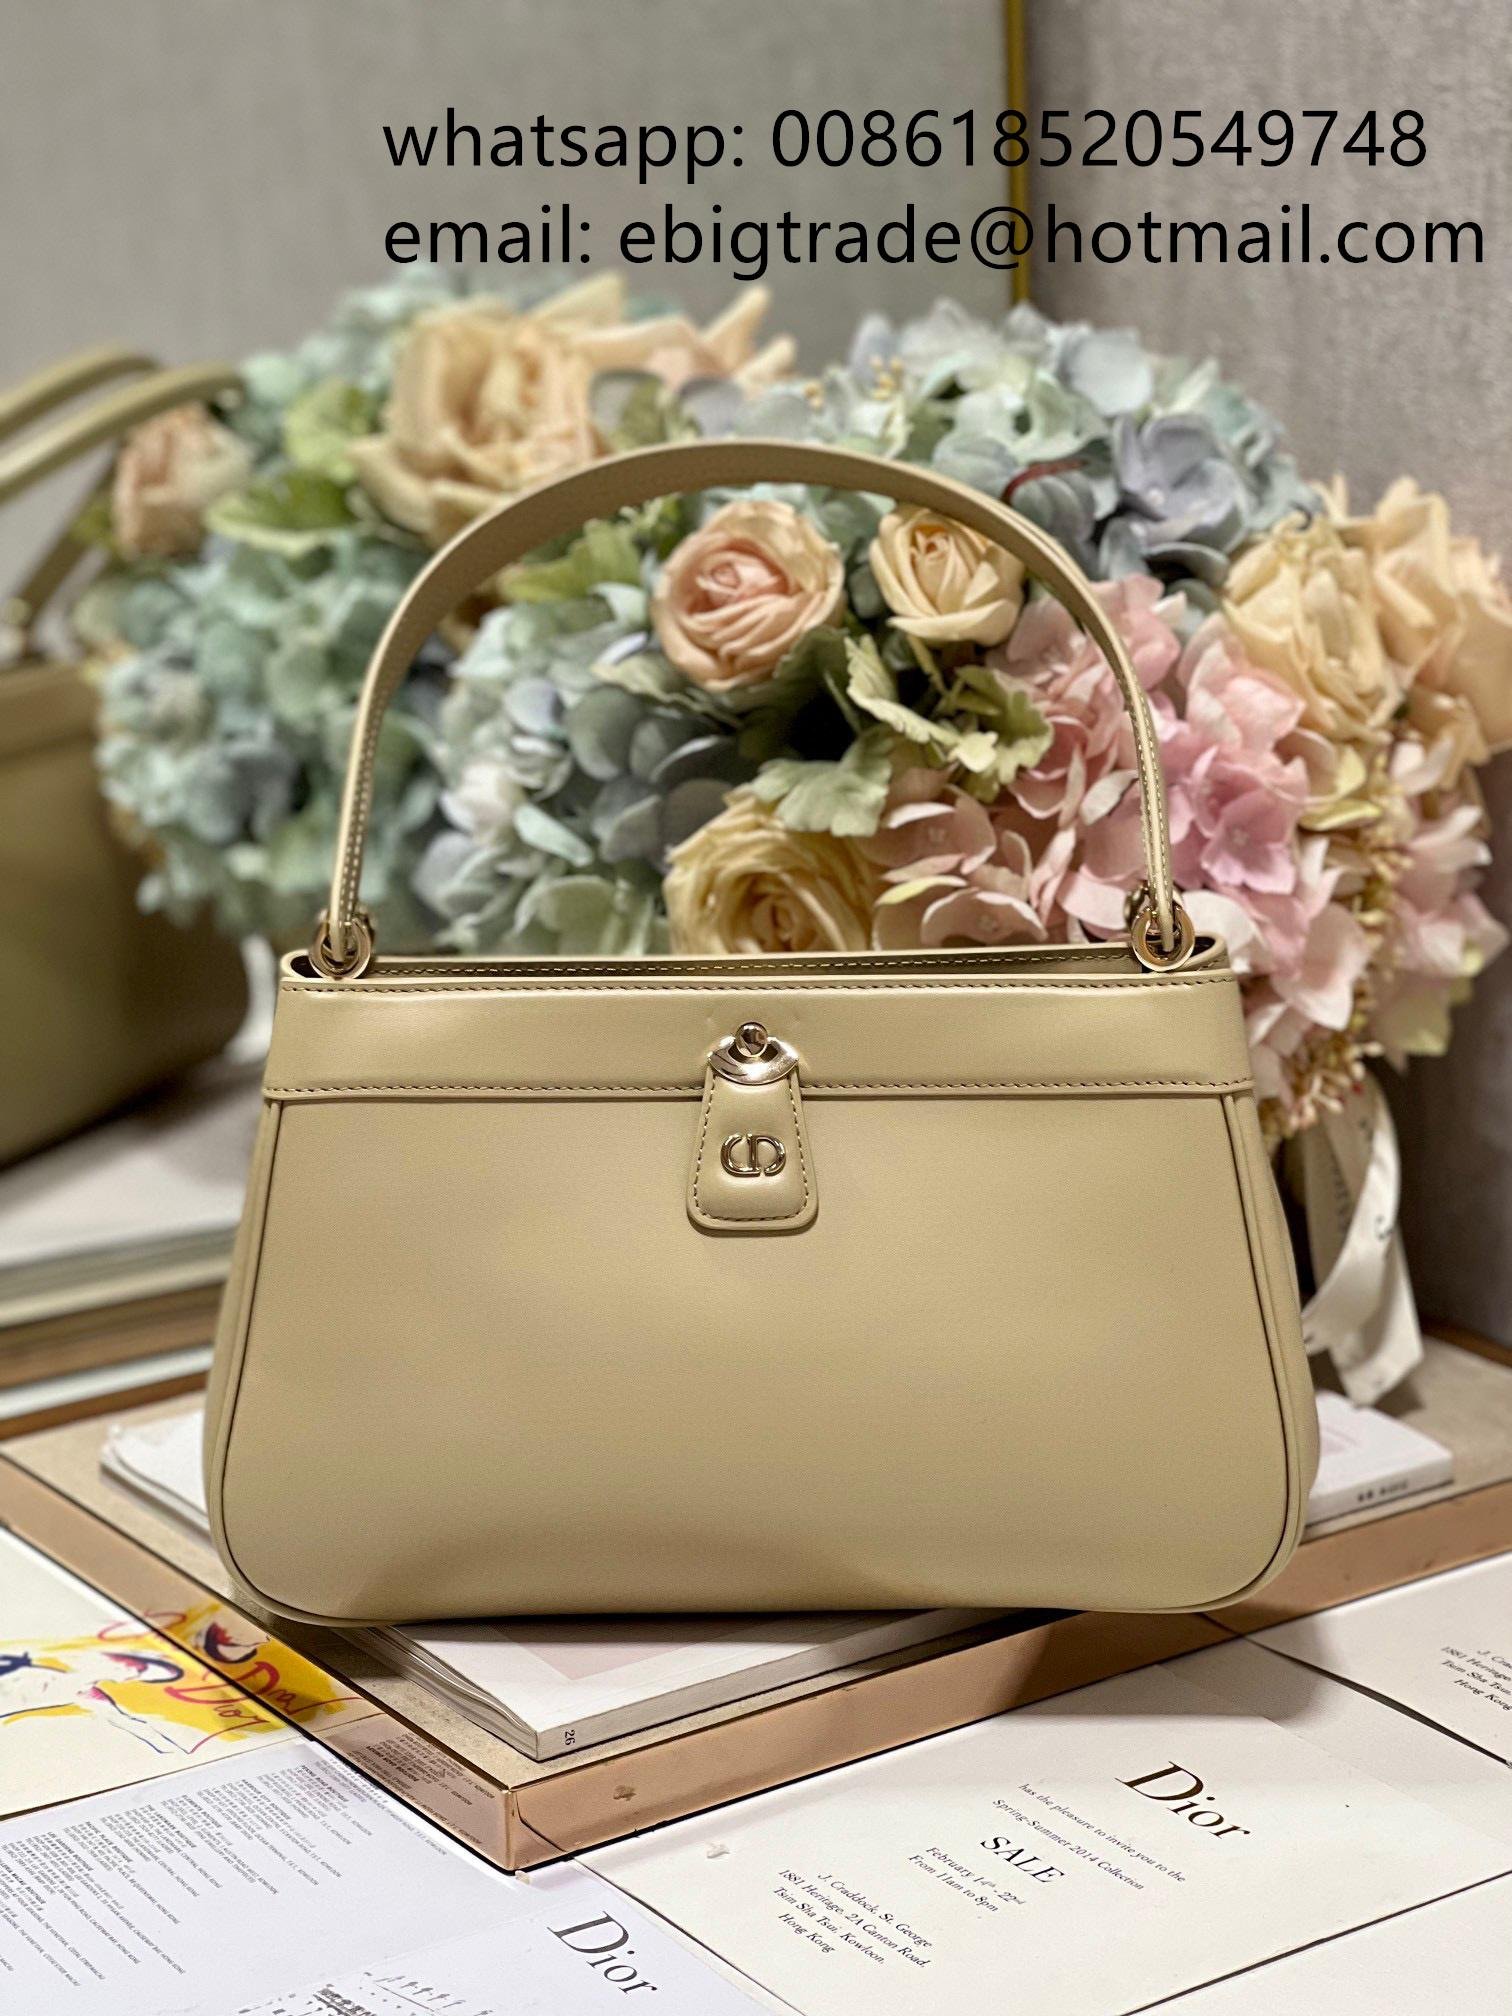 Lady      Medium      Key Bag Small      Key Bag discount      Bag online Outlet 4